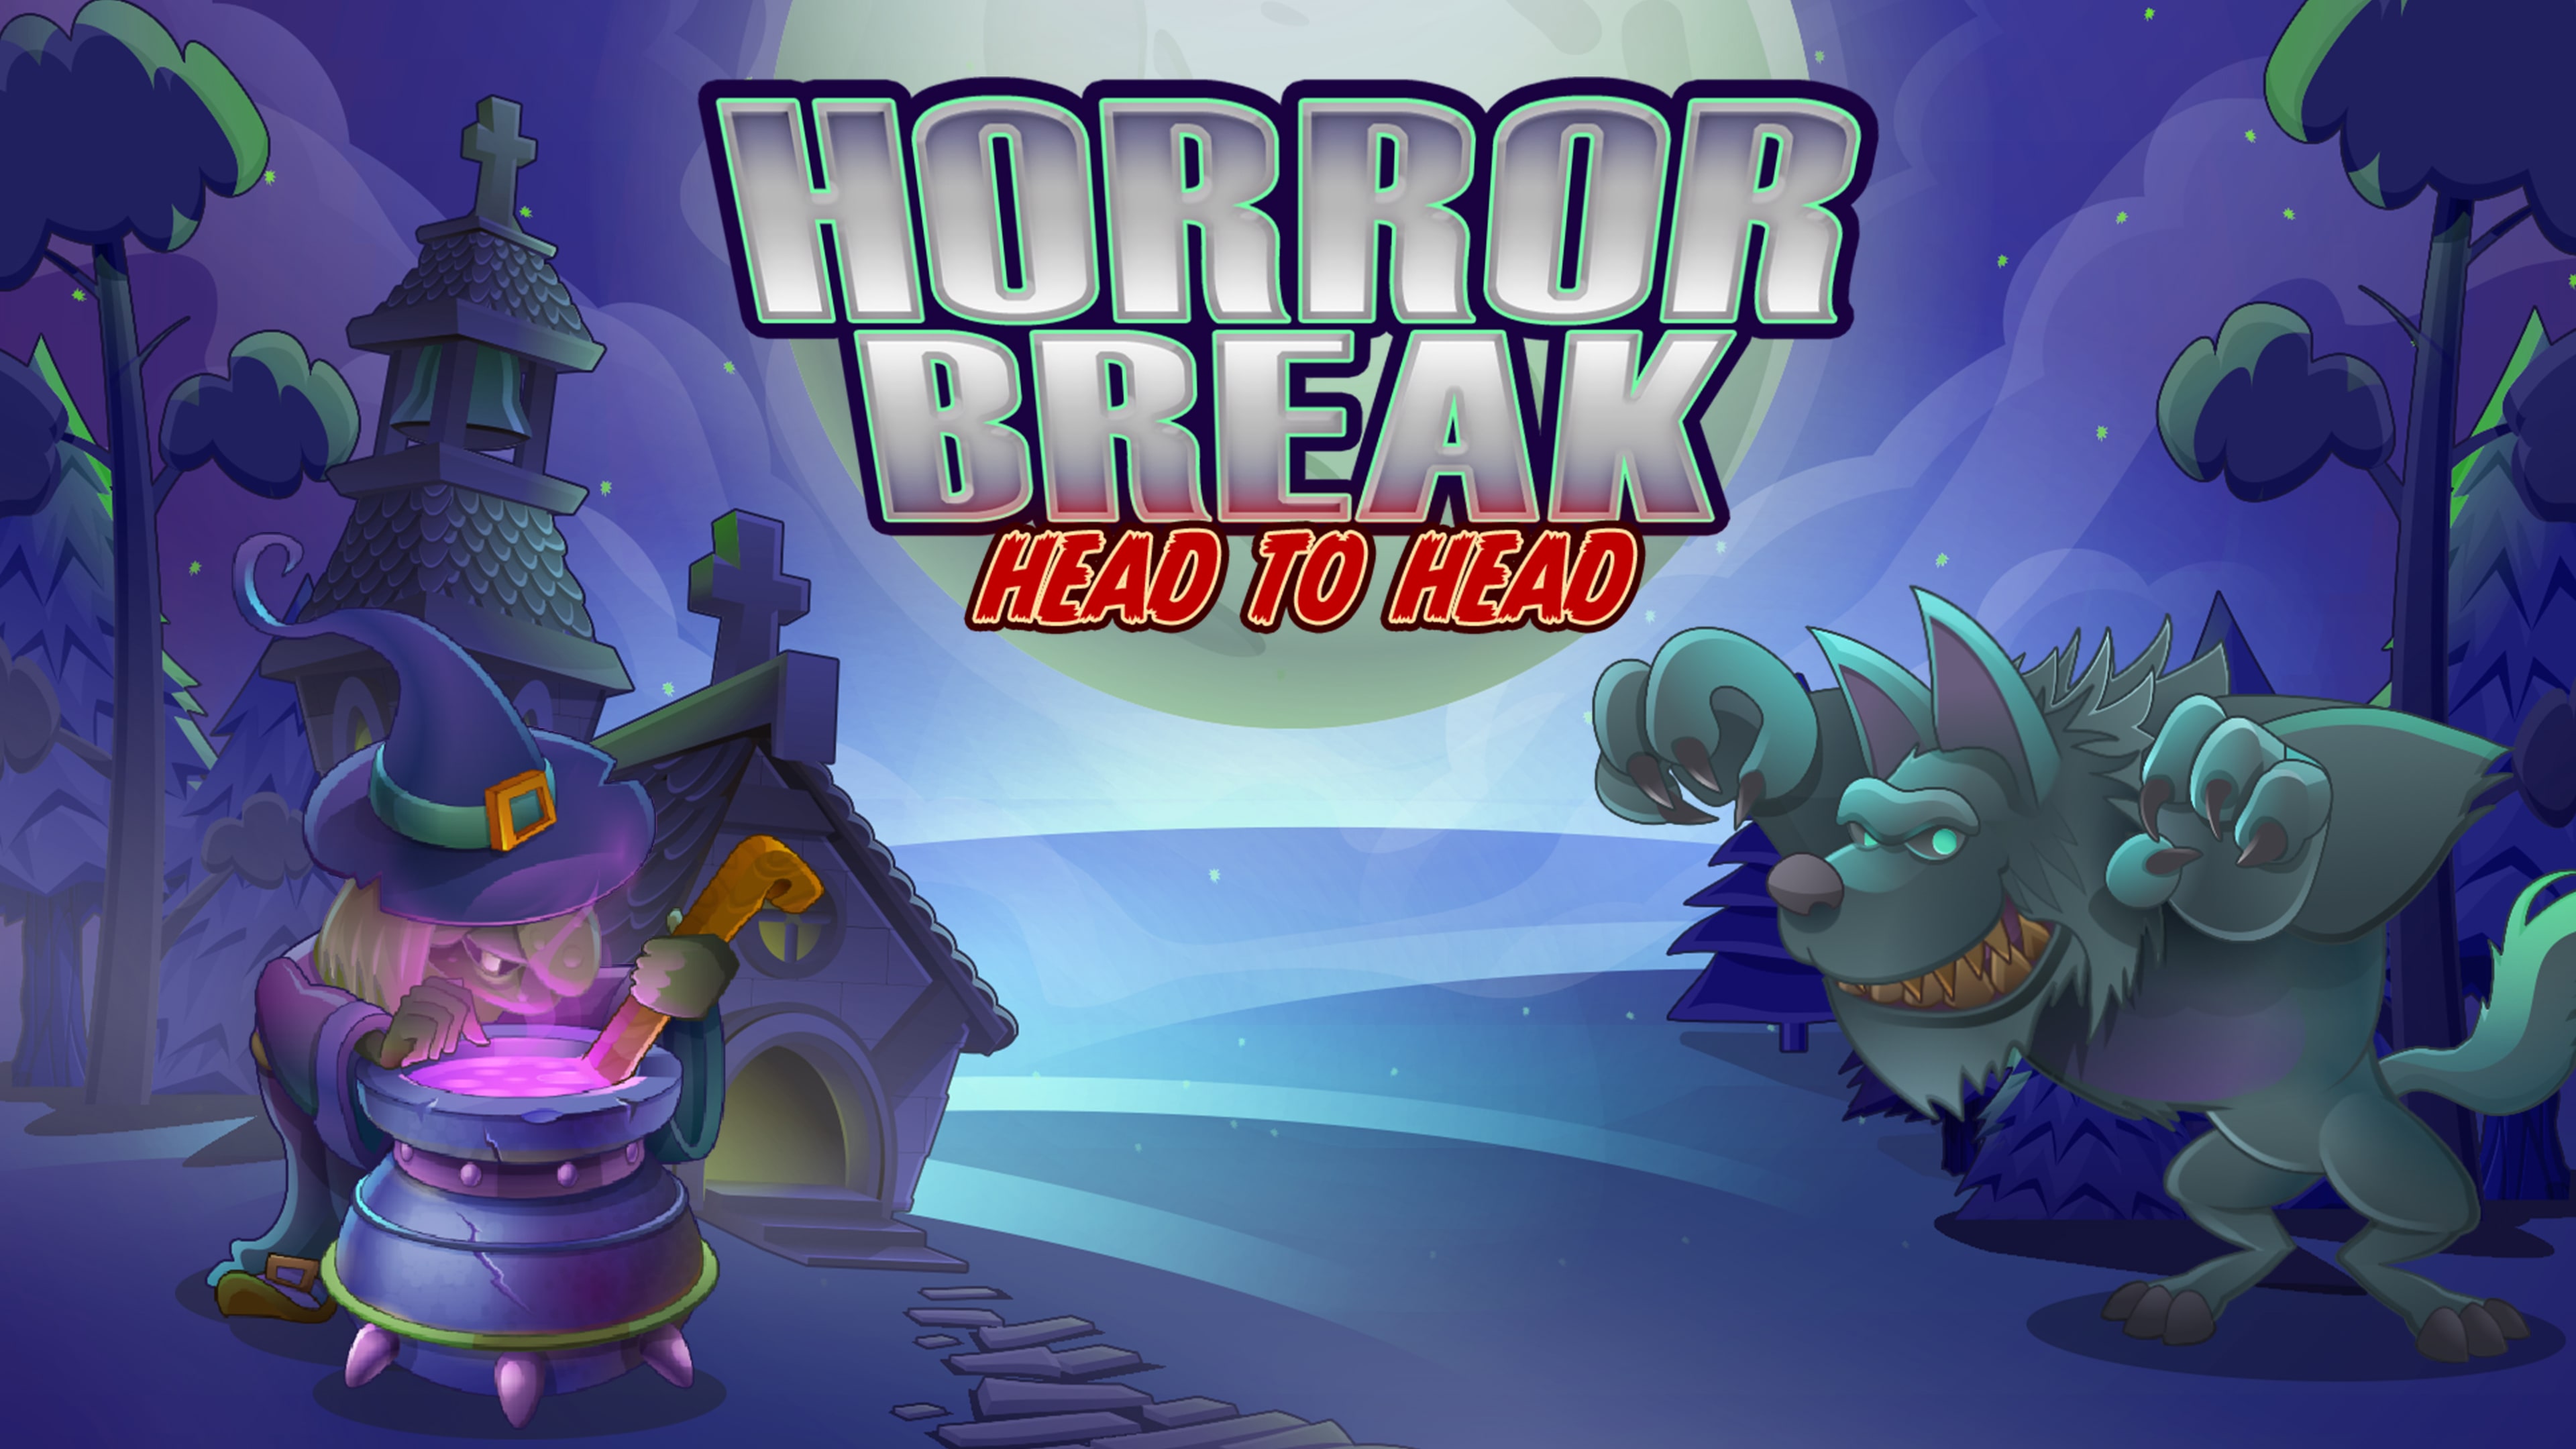 Horror Break Head to Head - Avatar Full Game Bundle